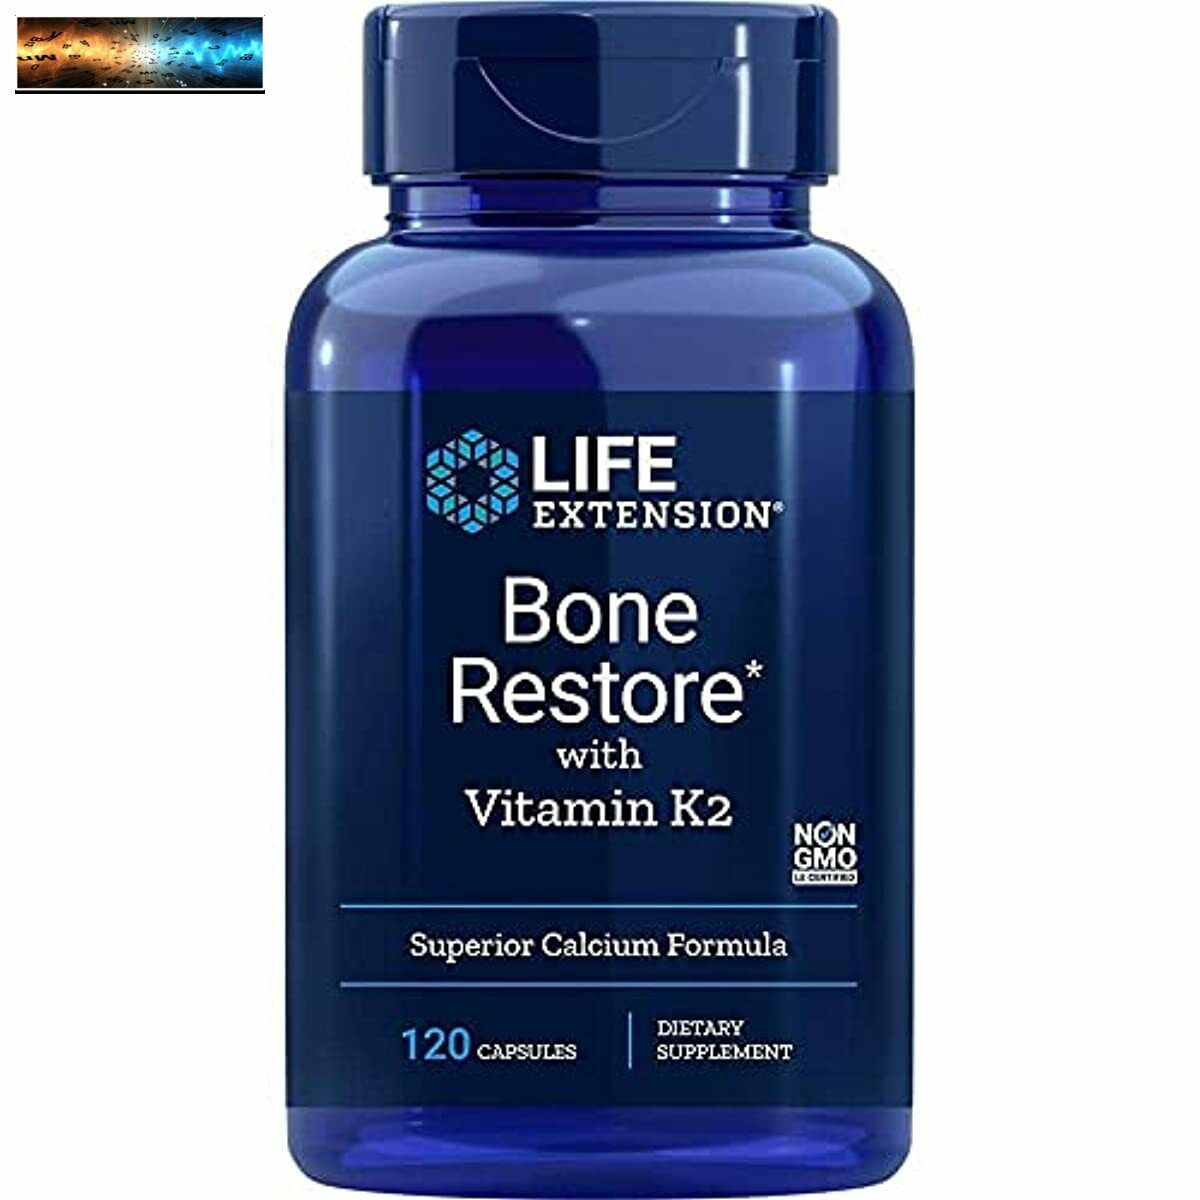 Life Extension Bone Restore with Vitamin K2, 120 Capsules